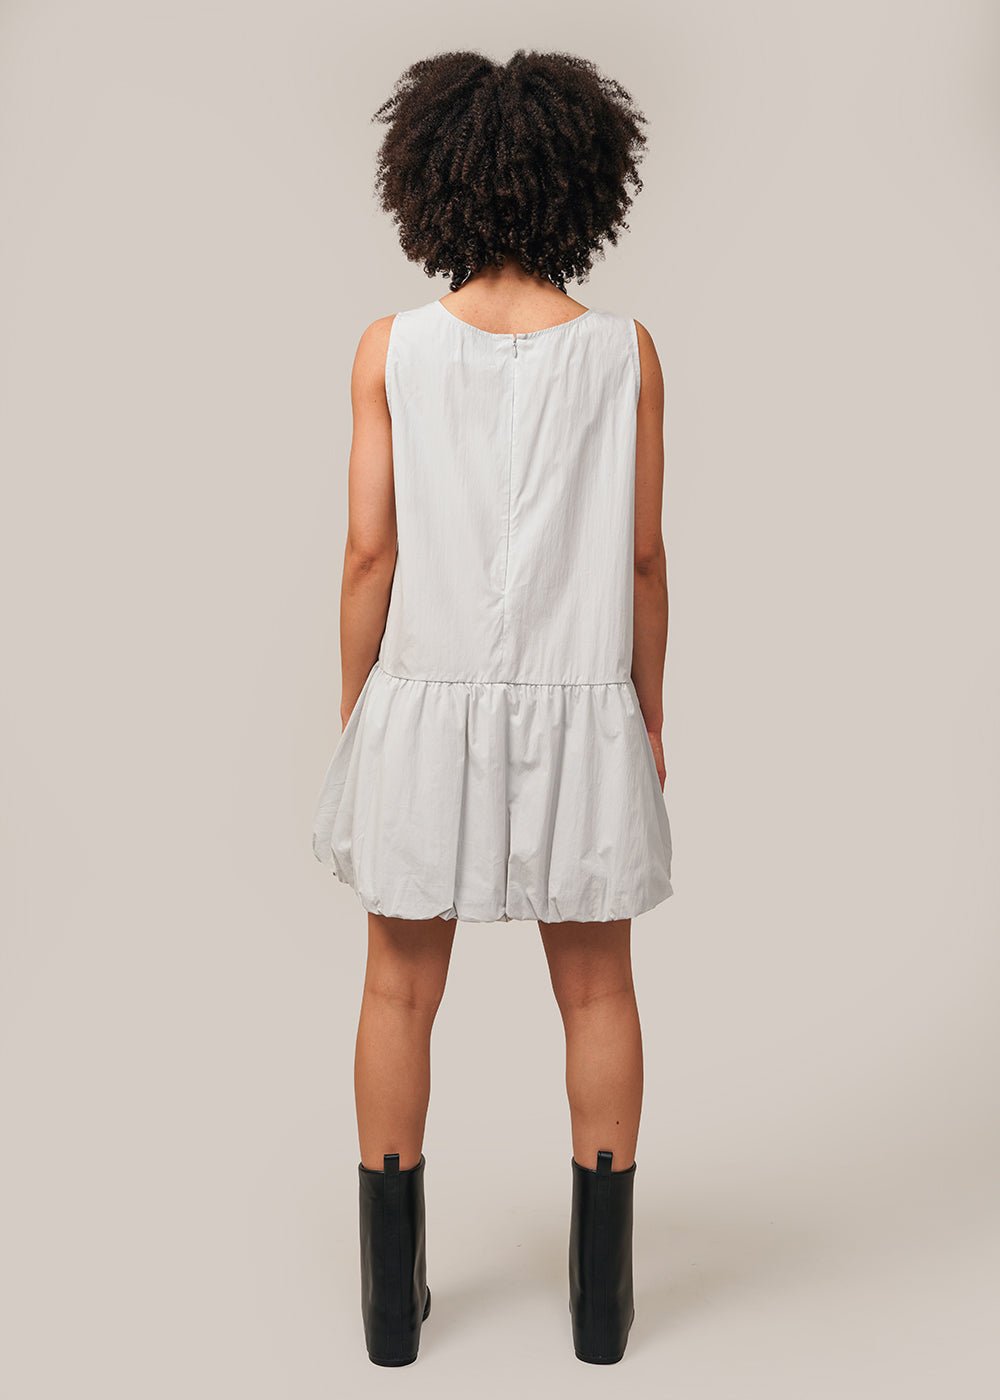 AMOMENTO Light Gray Volume Mini Dress - New Classics Studios Sustainable Ethical Fashion Canada